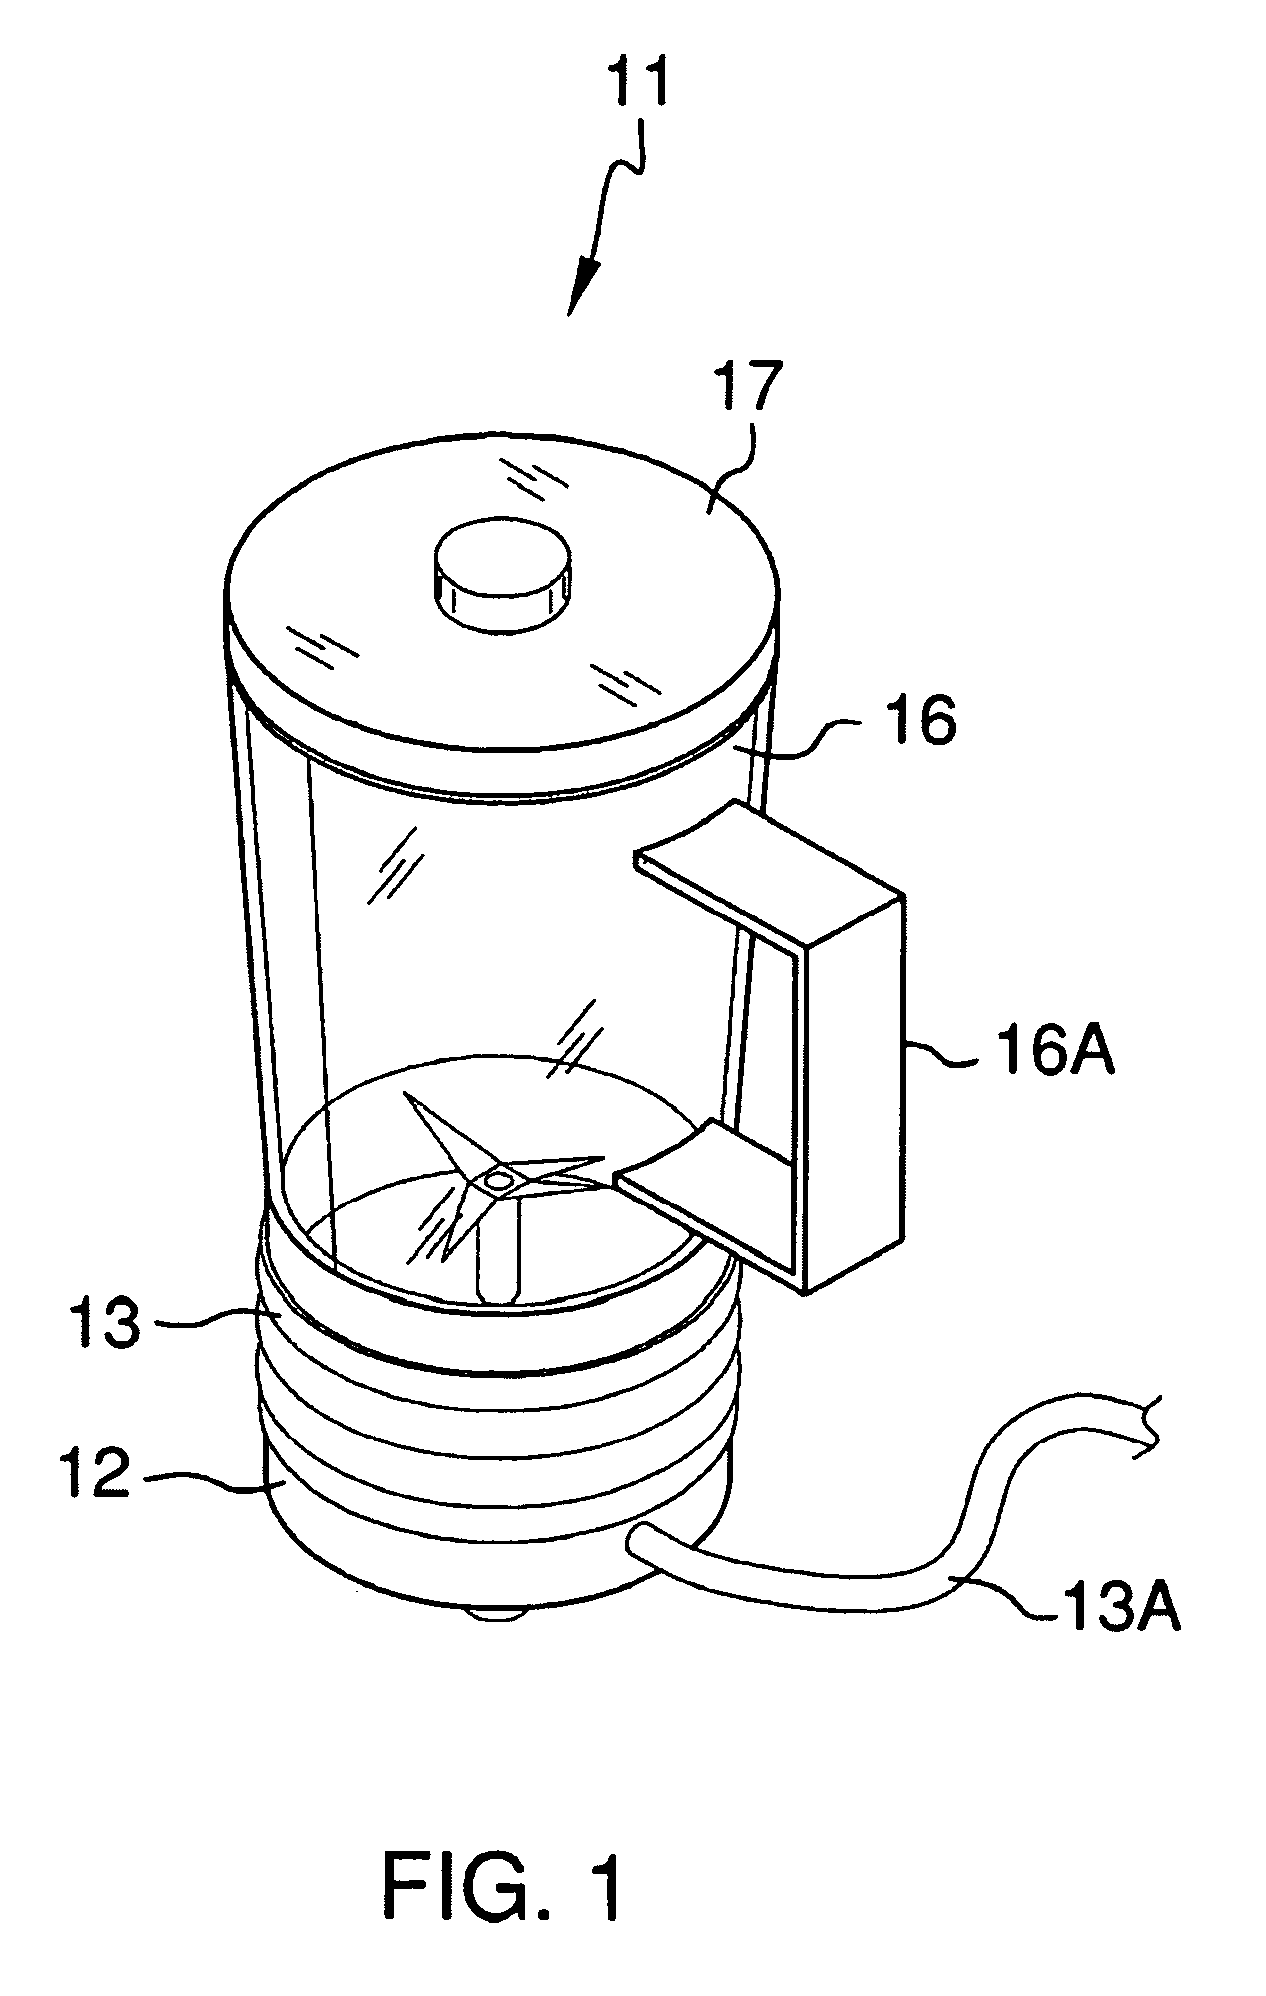 Portable blender with swiveling base